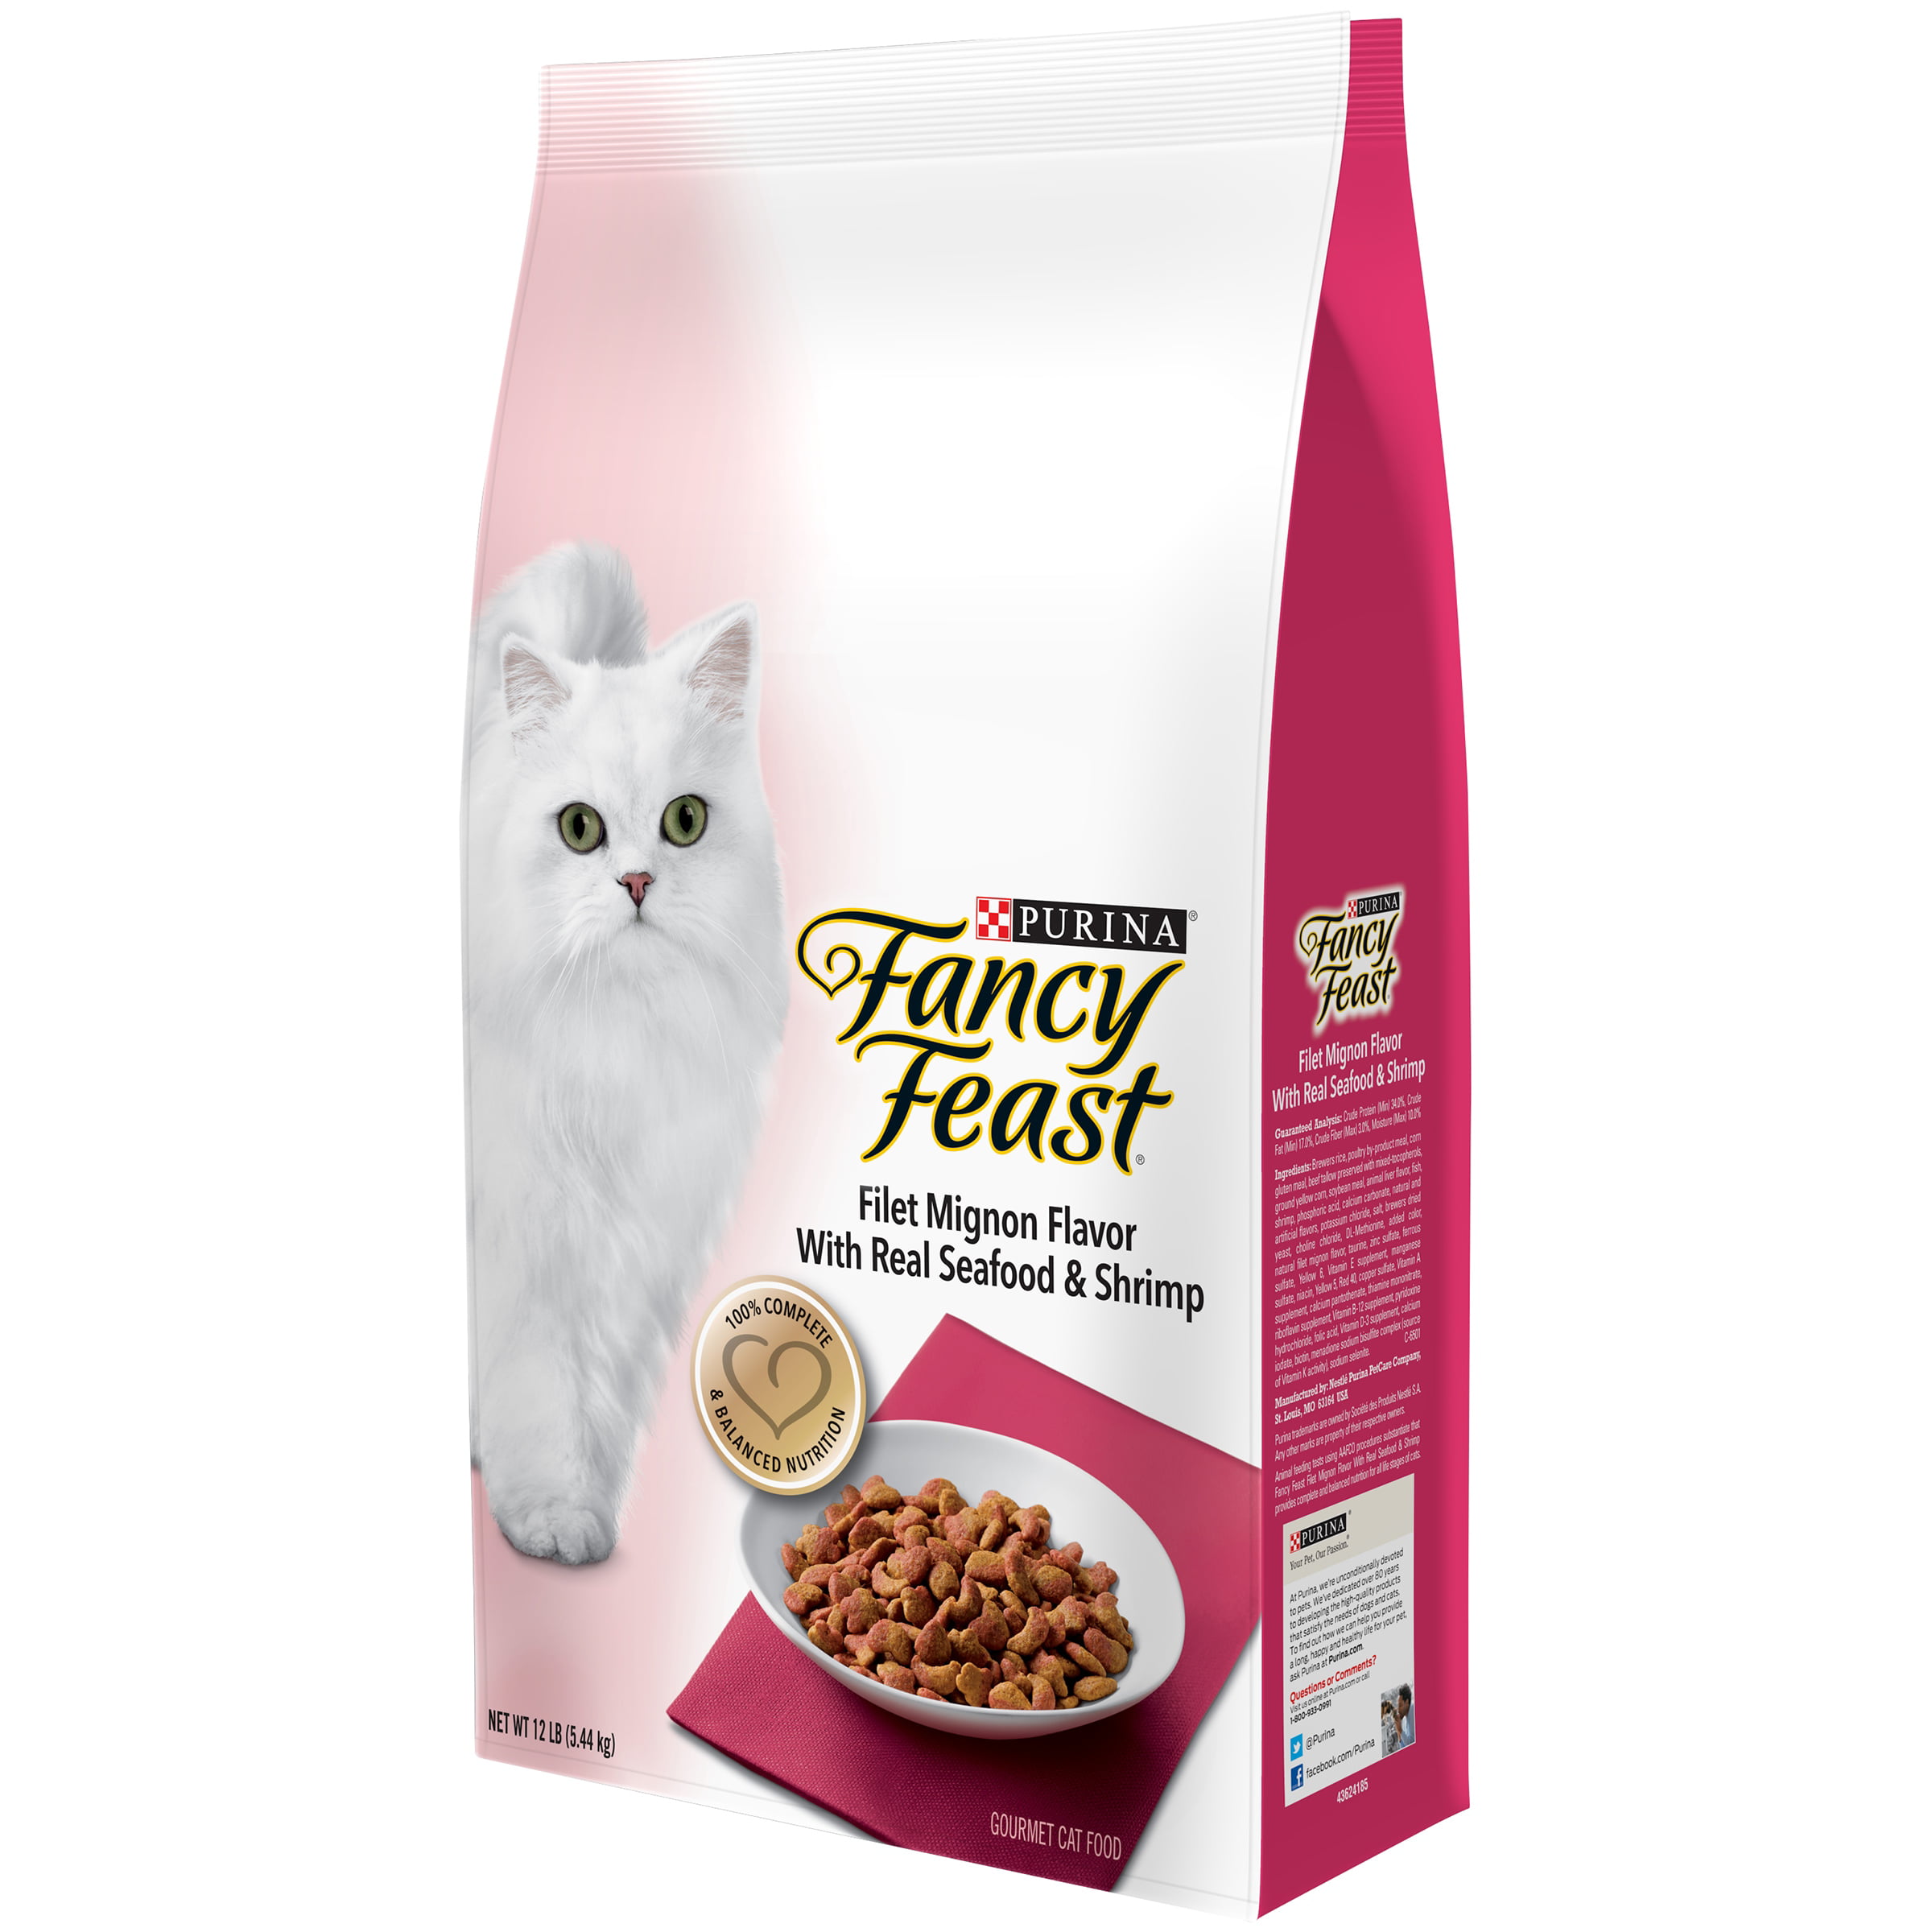 Purina Fancy Feast Dry Cat Food